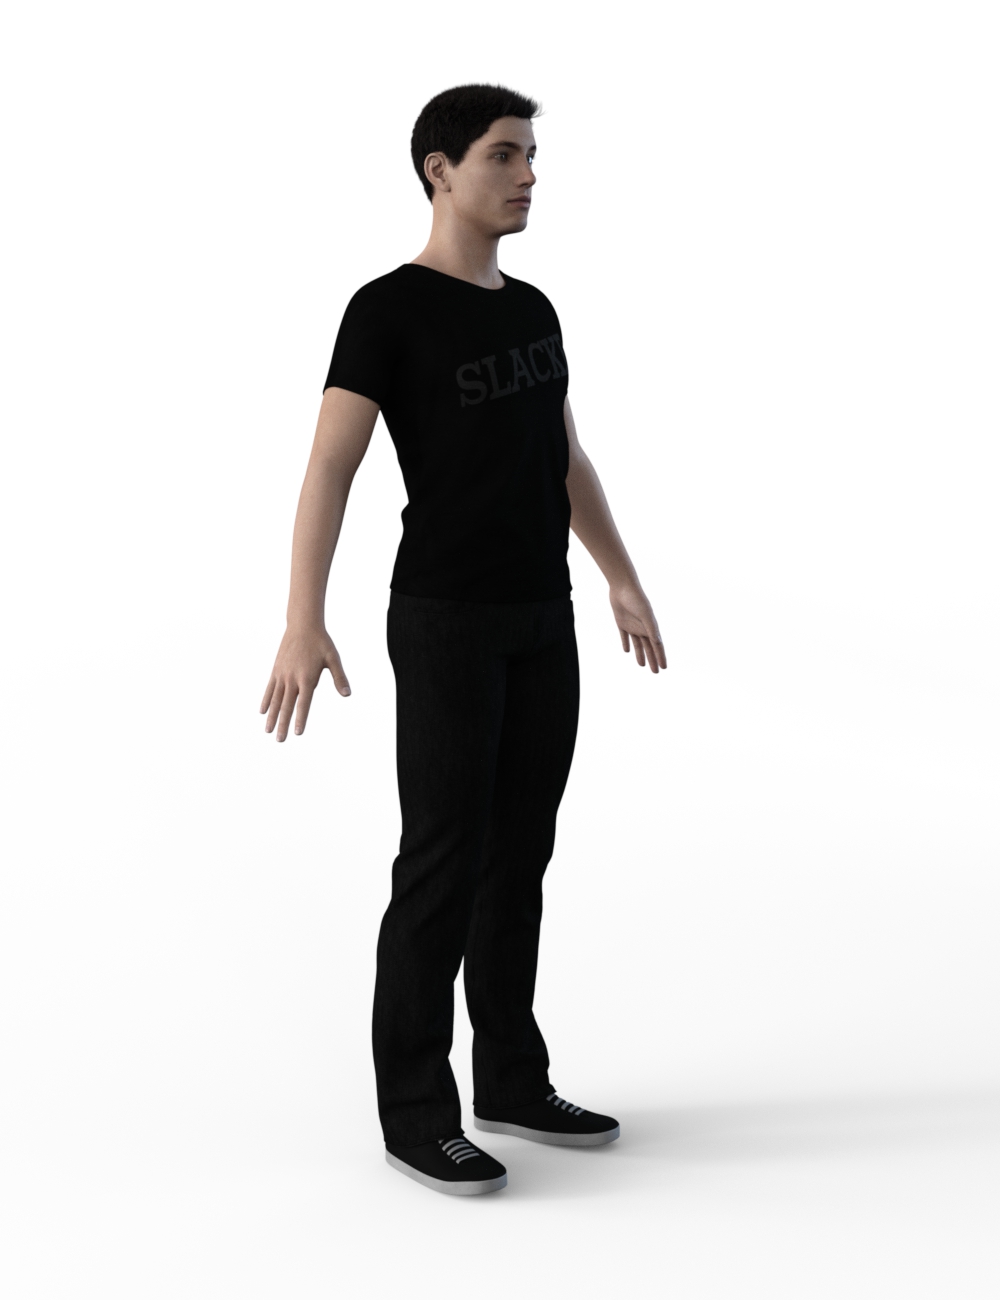 FBX- Base Male Slacker Outfit by: Paleo, 3D Models by Daz 3D